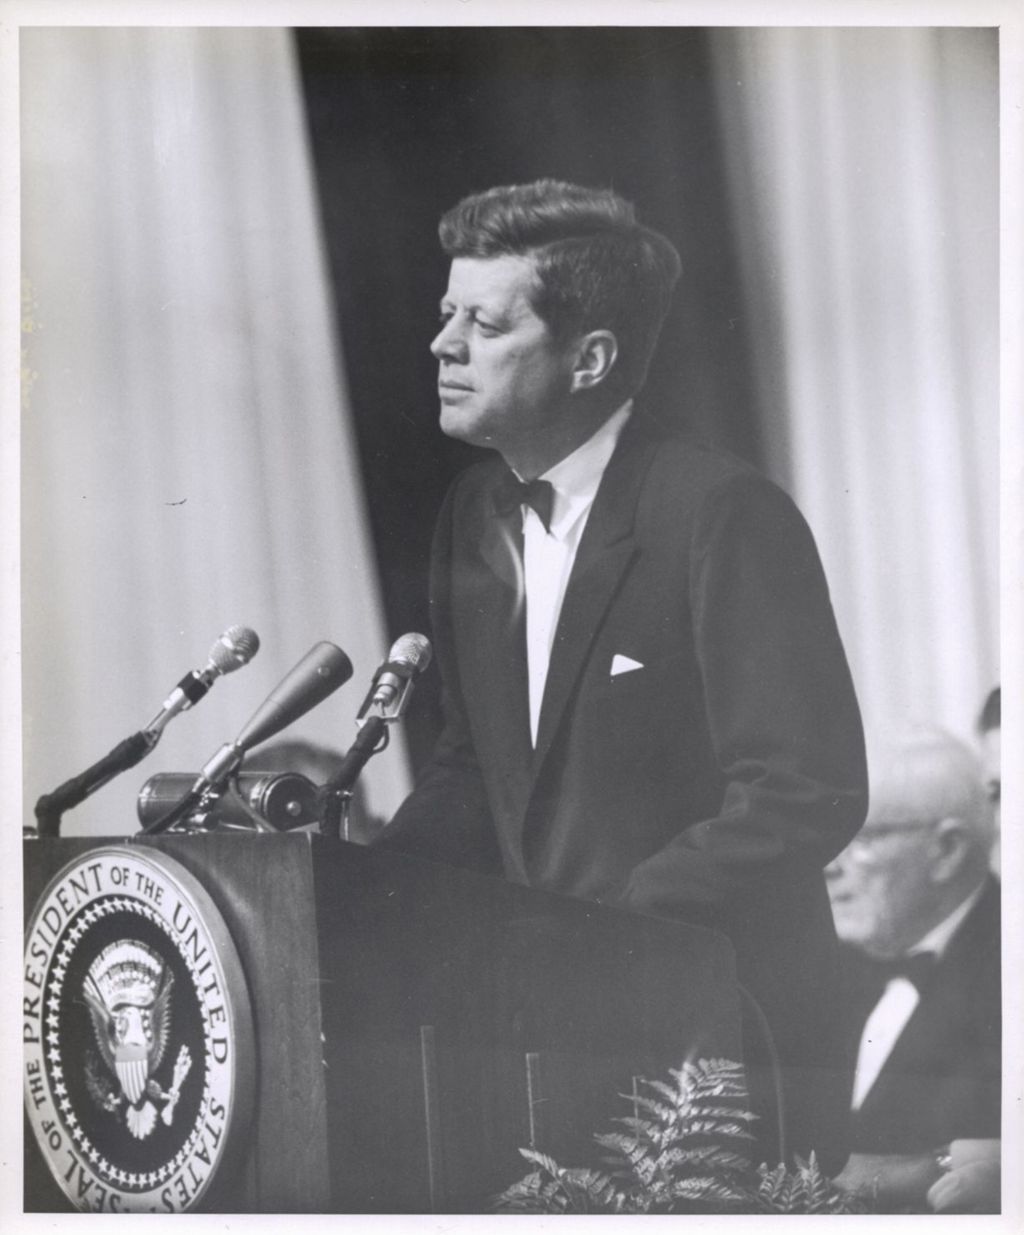 Miniature of John F. Kennedy speaks at Democratic fundraising dinner